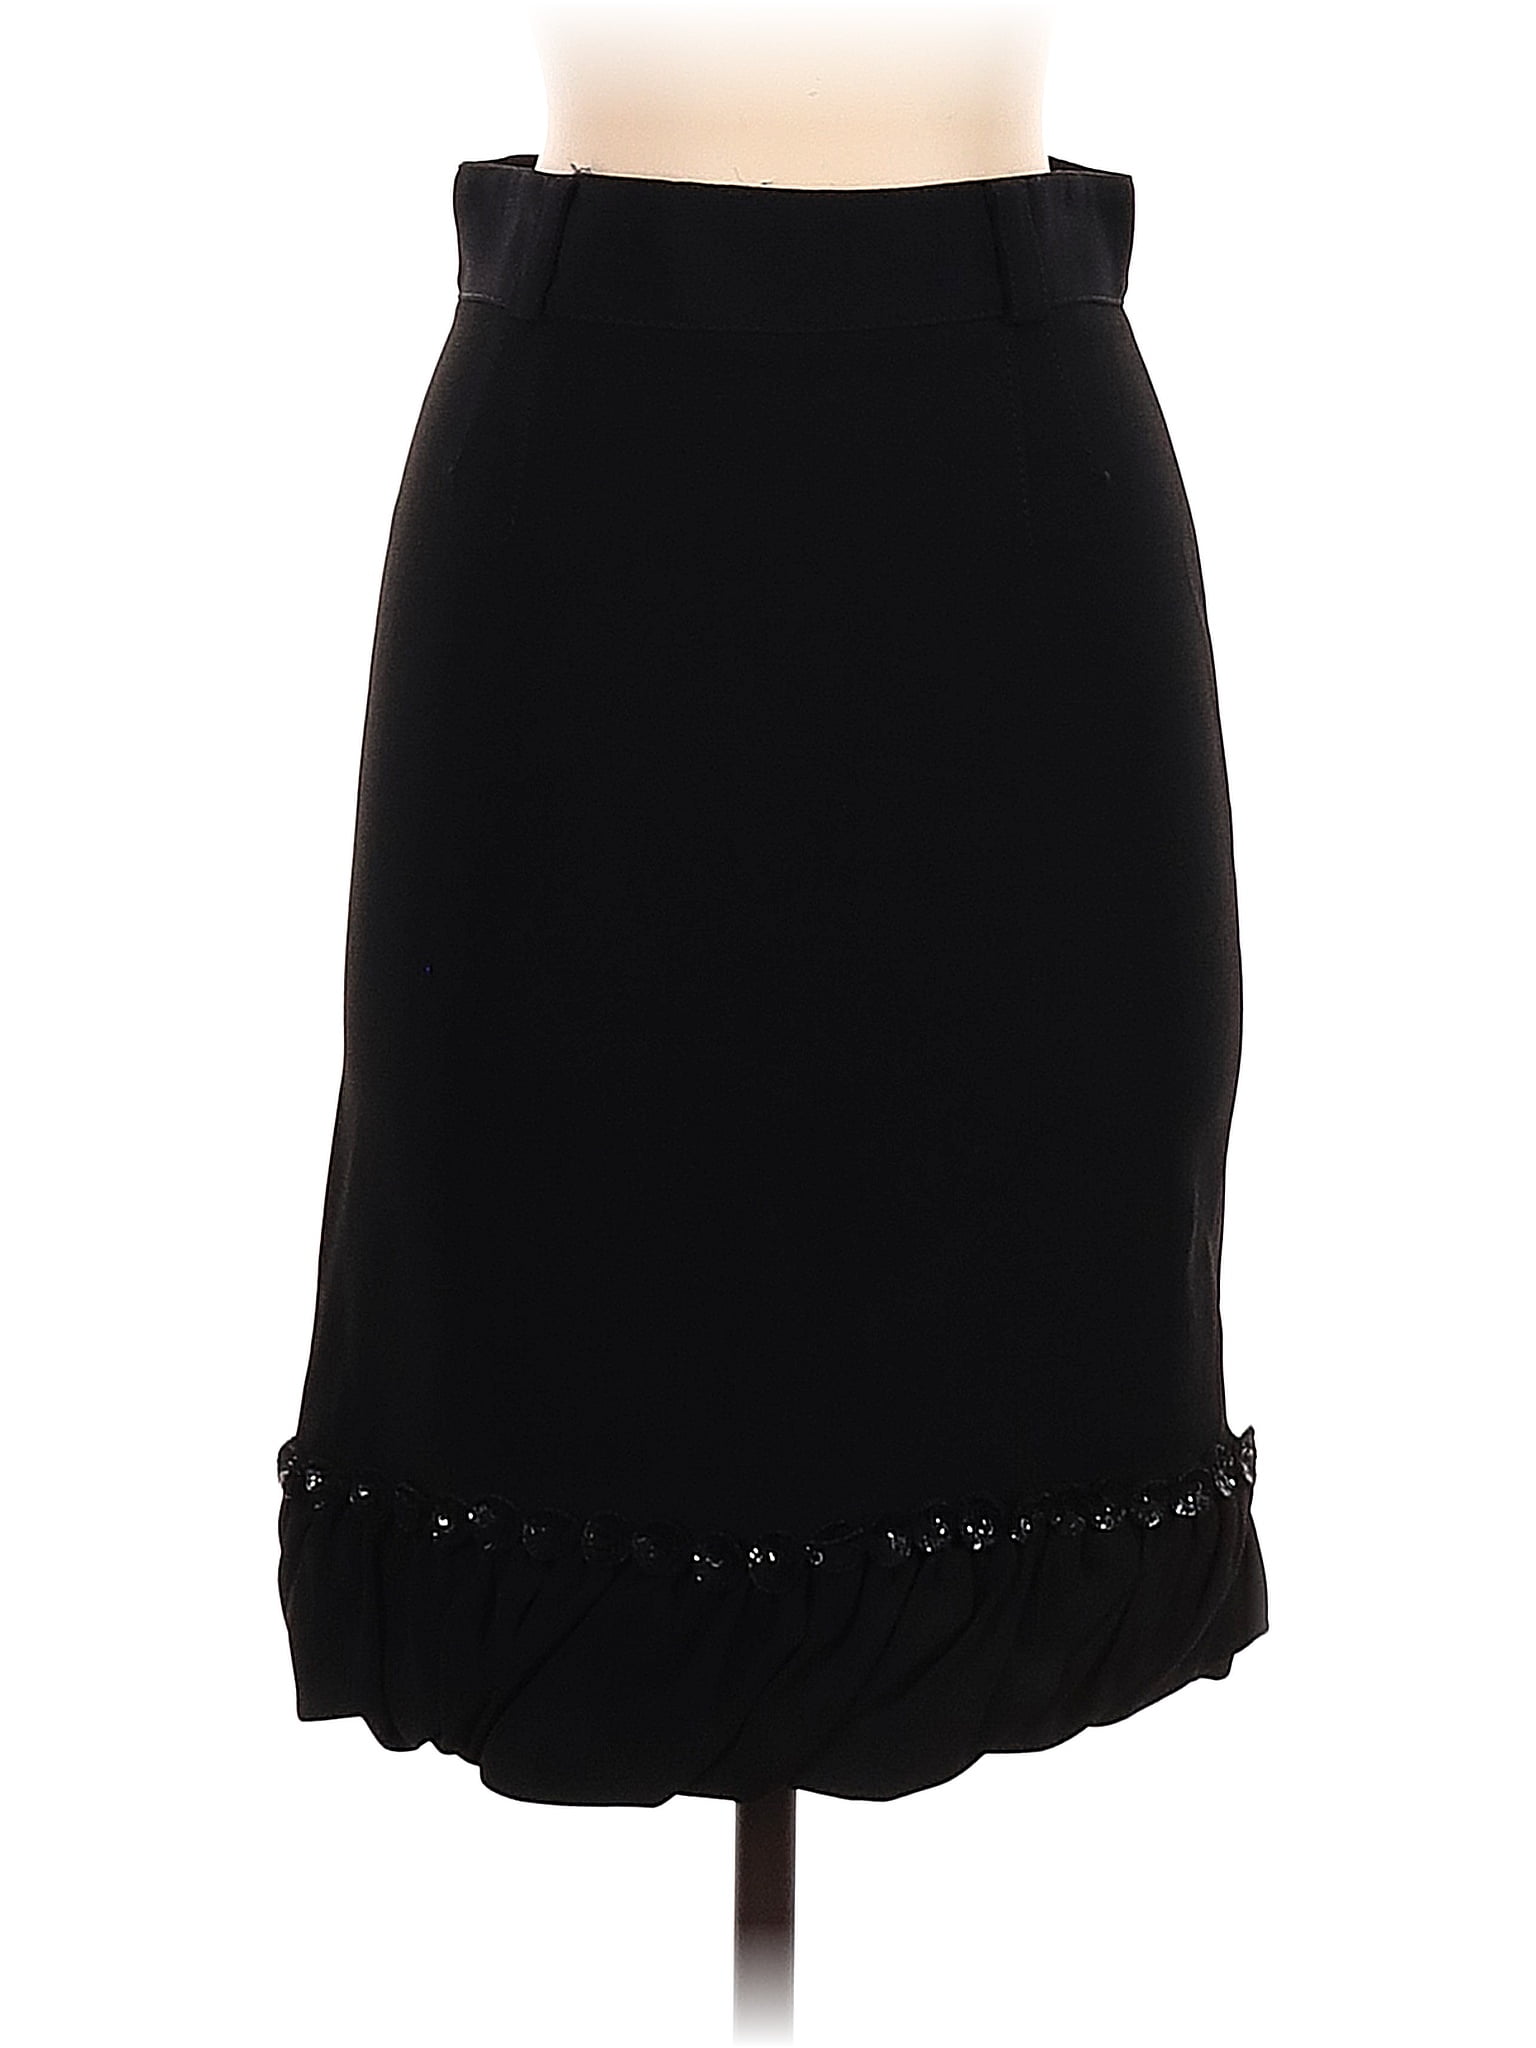 Anna Molinari Solid Black Casual Skirt Size 38 (IT) - 83% off | thredUP